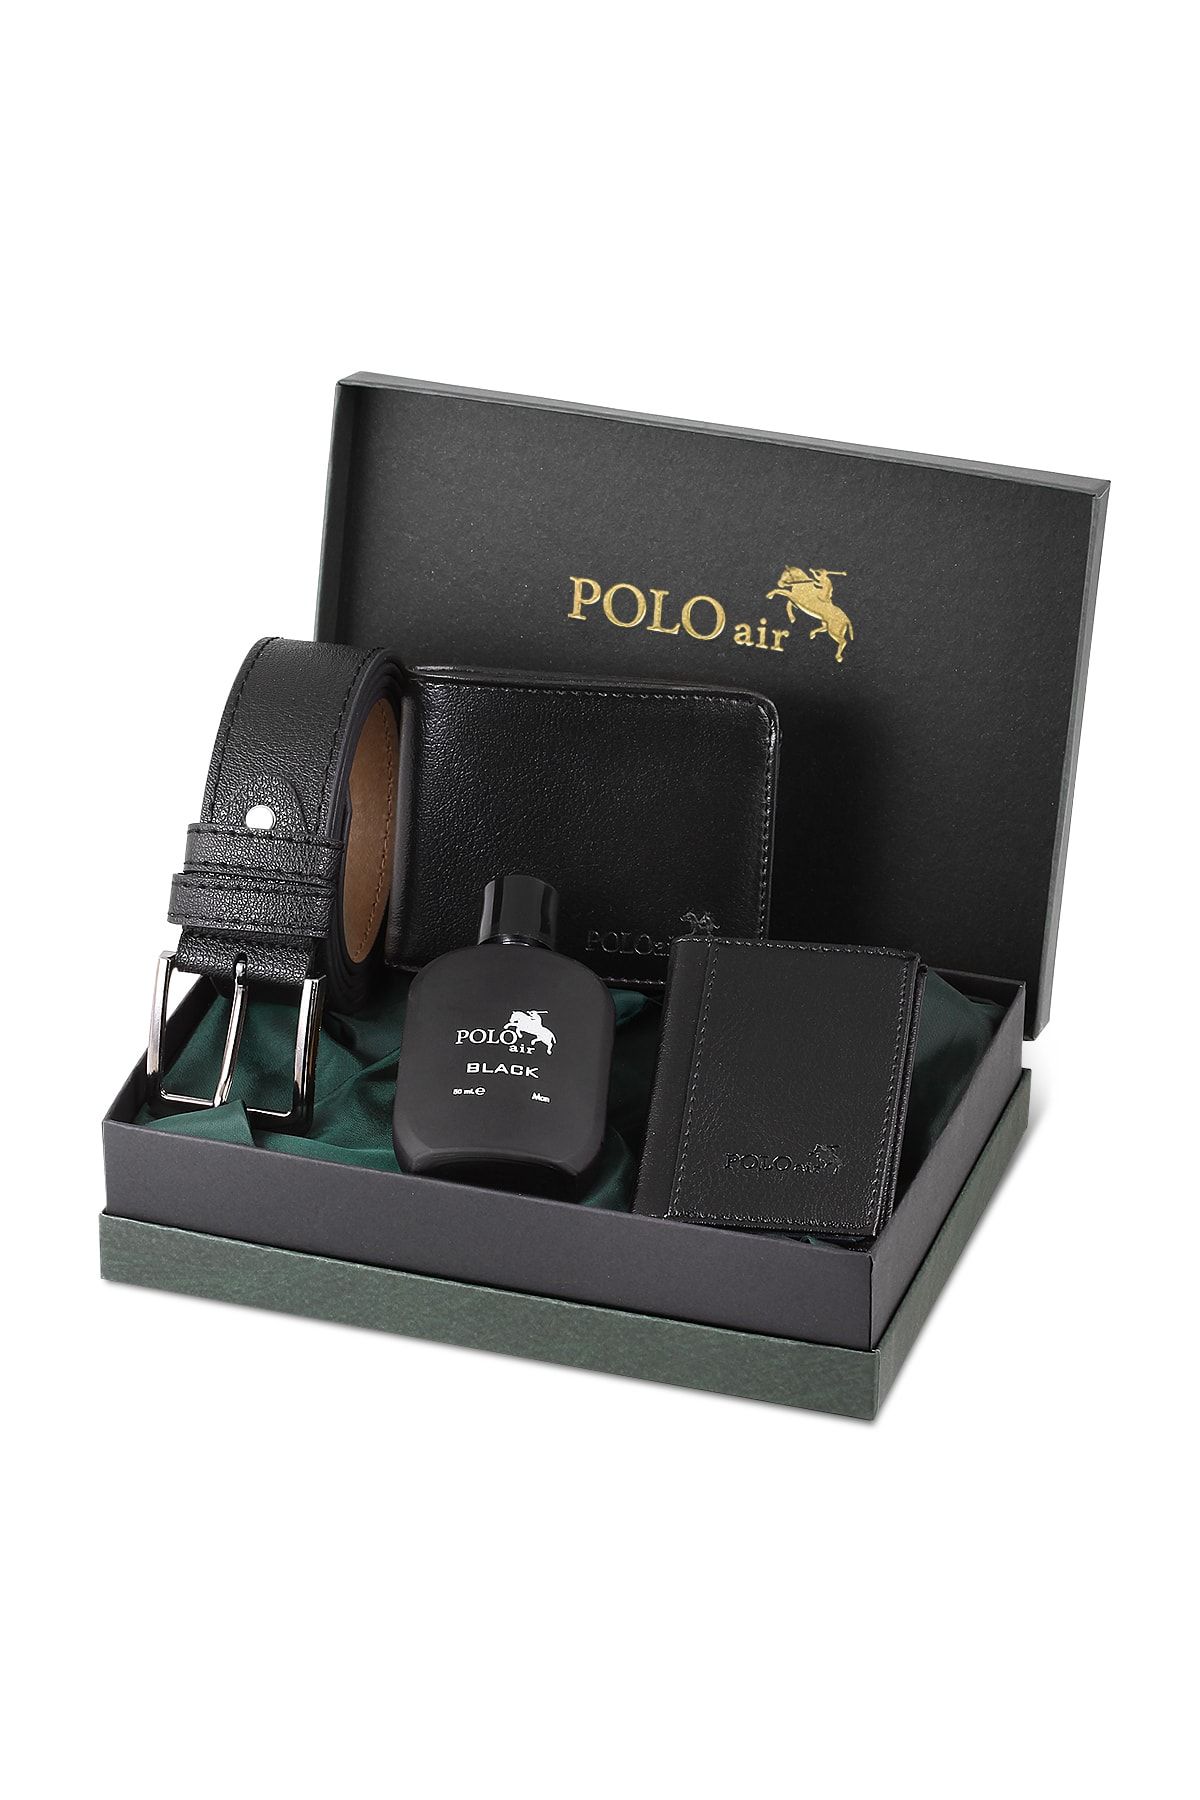 polo air Kutulu Klasik Erkek Cüzdan Kemer Kartlık Parfüm Seti Siyah